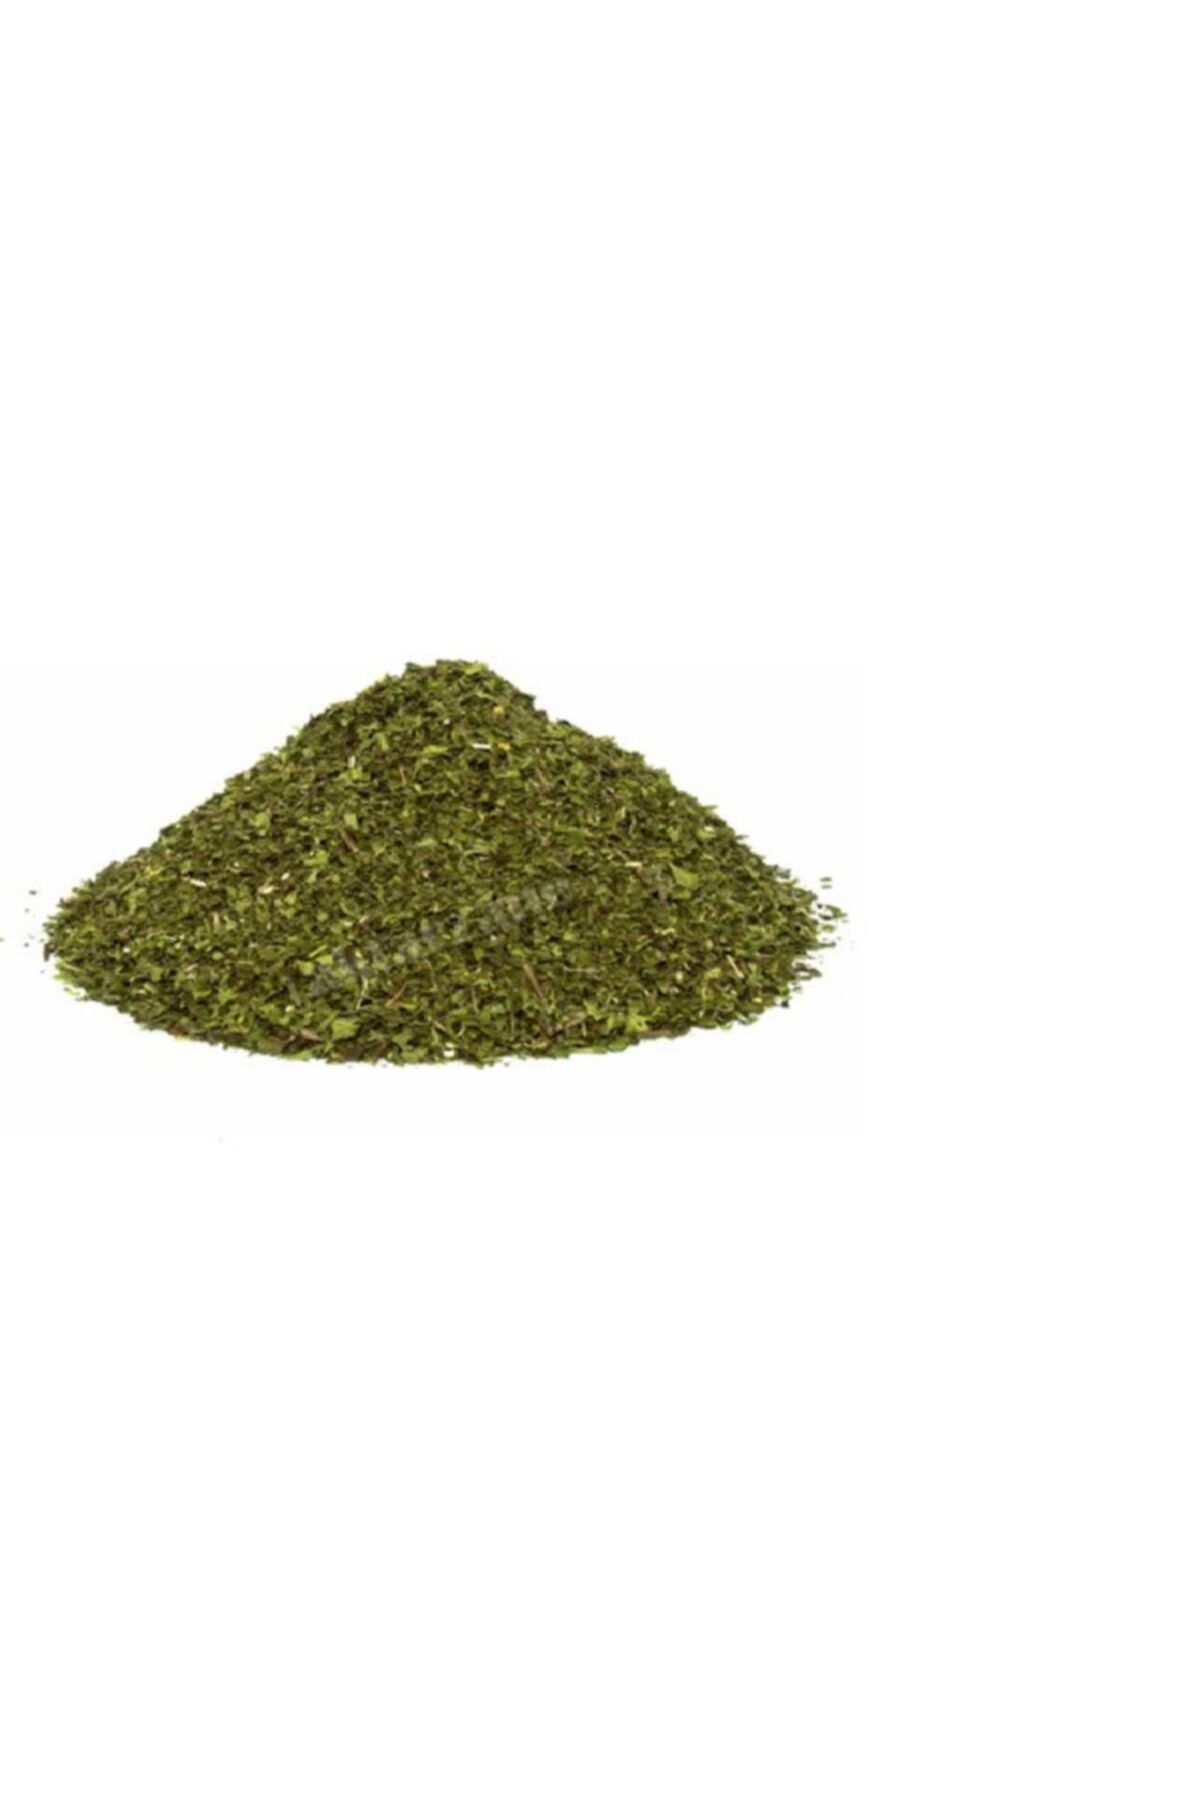 Genel Markalar Herbal Vital Nane Antep (mint) Kuru 250 Gr